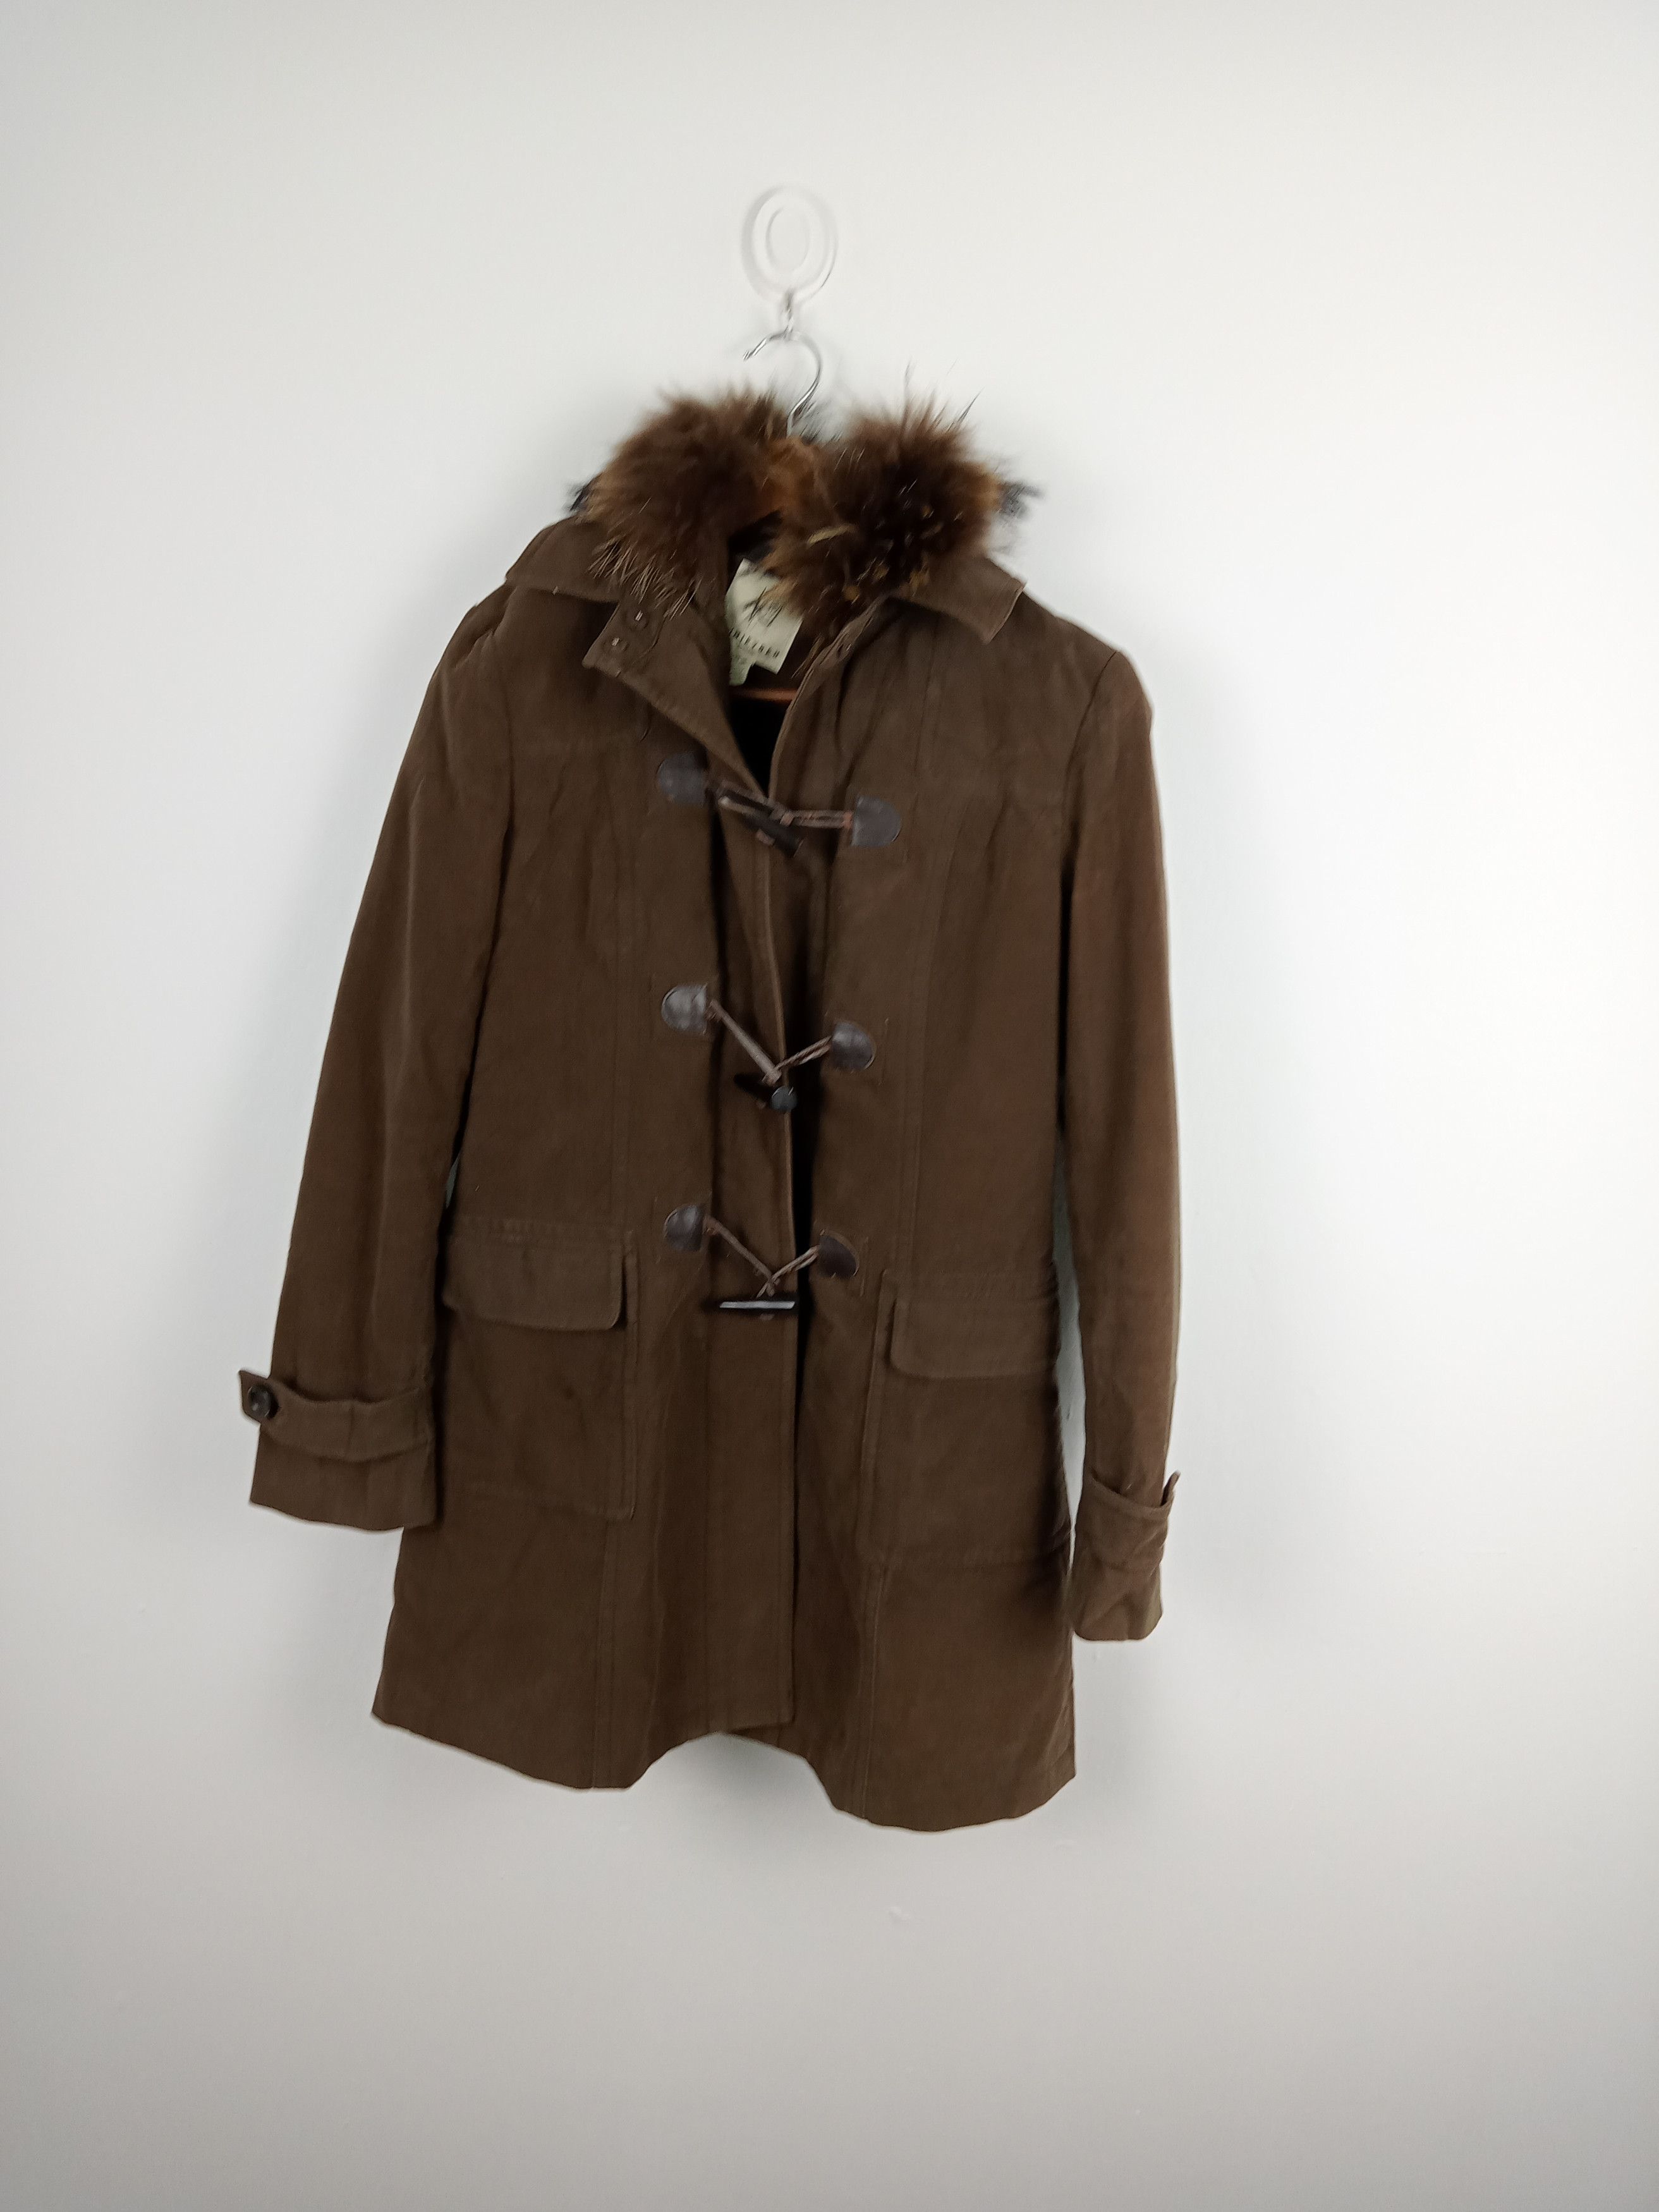 Designer Kumikyoku Vintage Design Hairy Hooded Jacket Size US S / EU 44-46 / 1 - 1 Preview